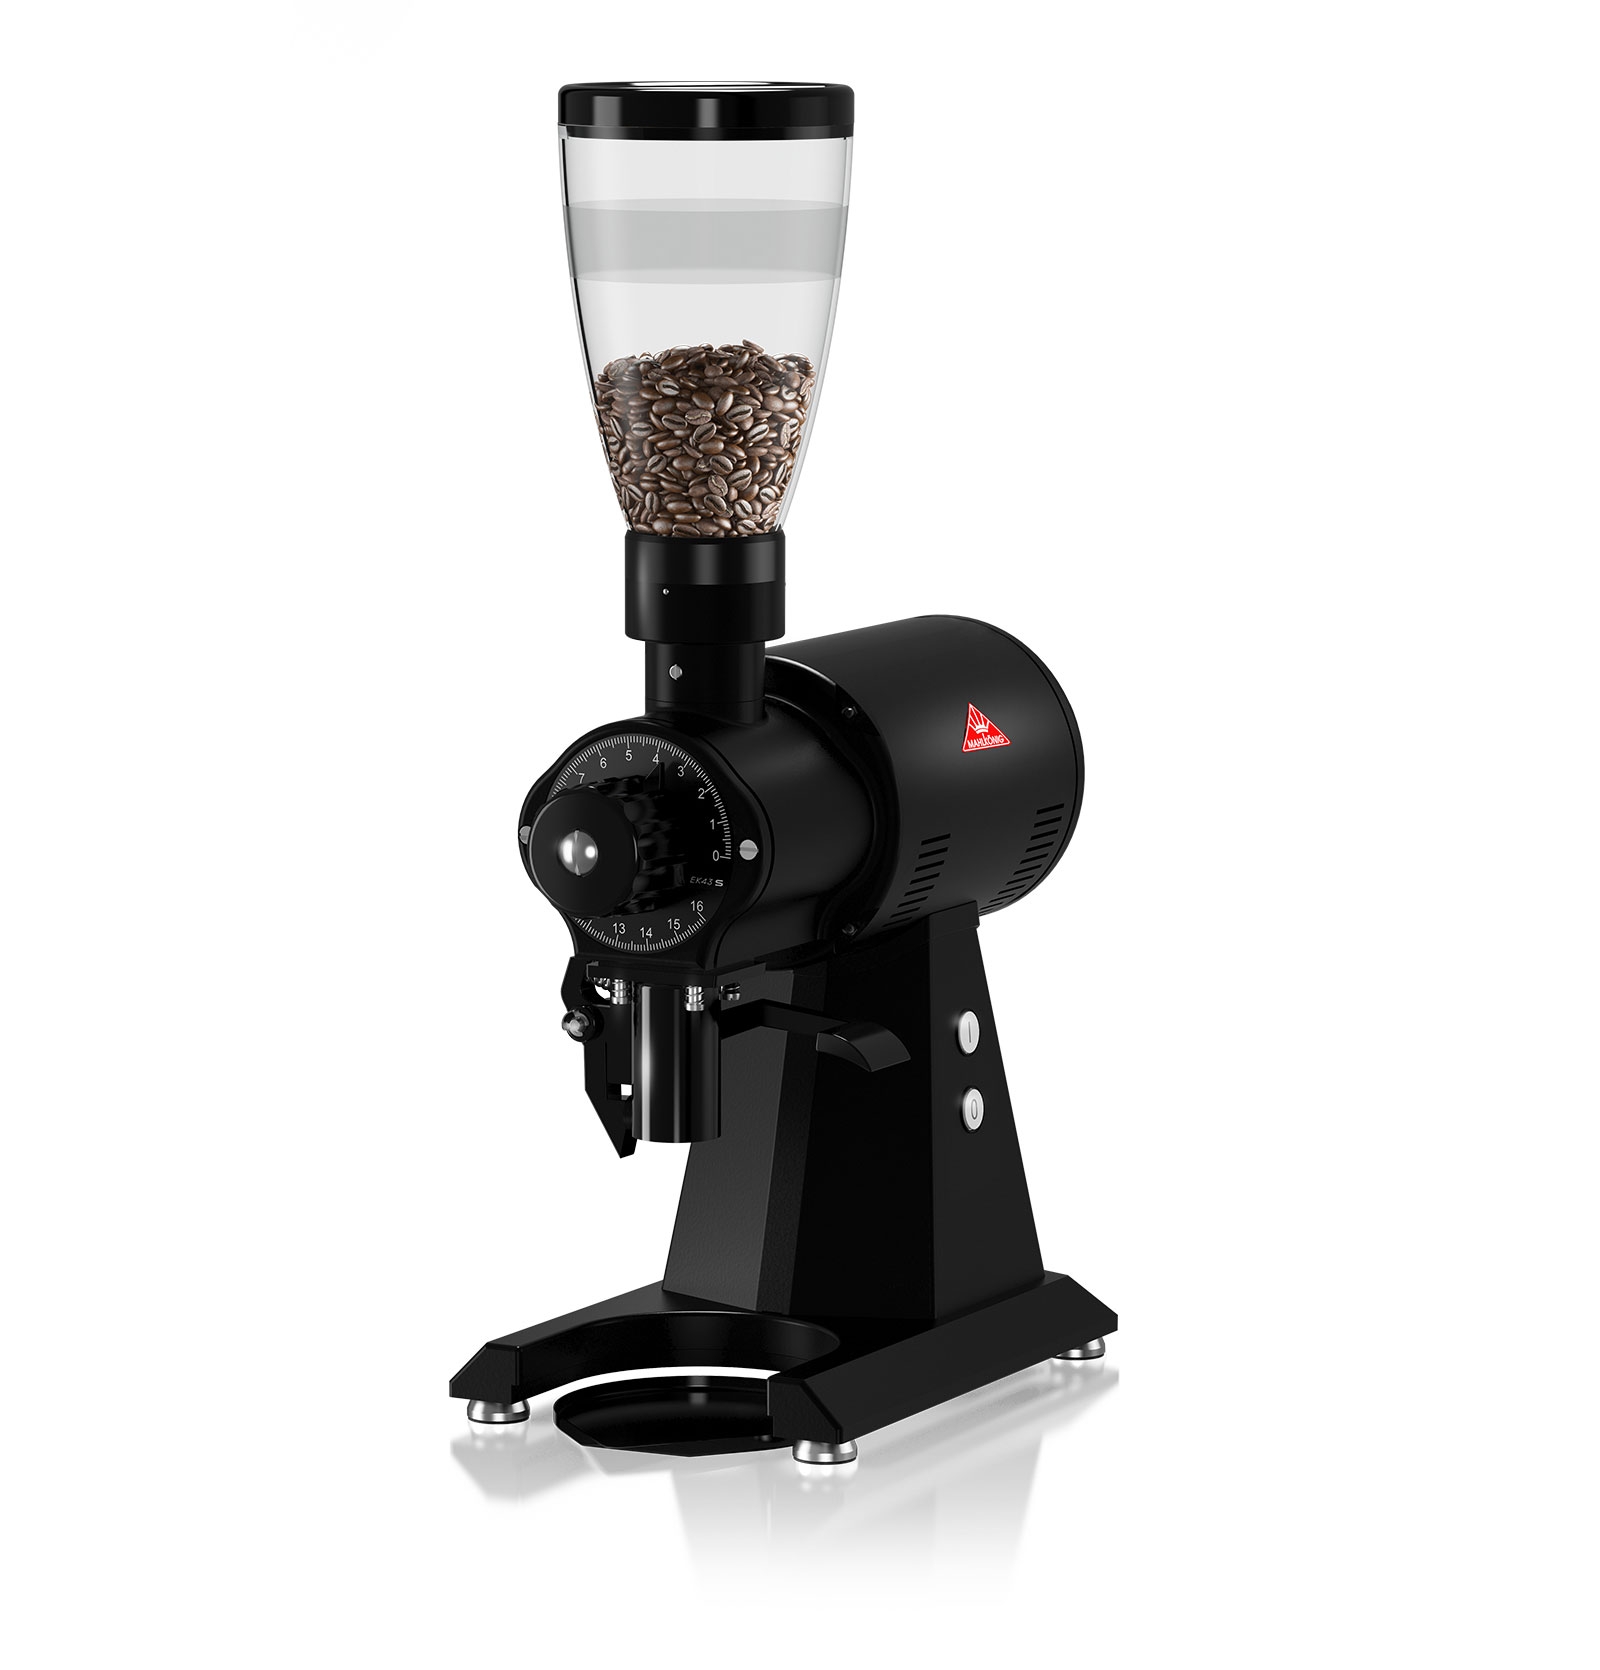 Mahlkönig EK 43 S Espresso &amp; Coffee Grinder black matt